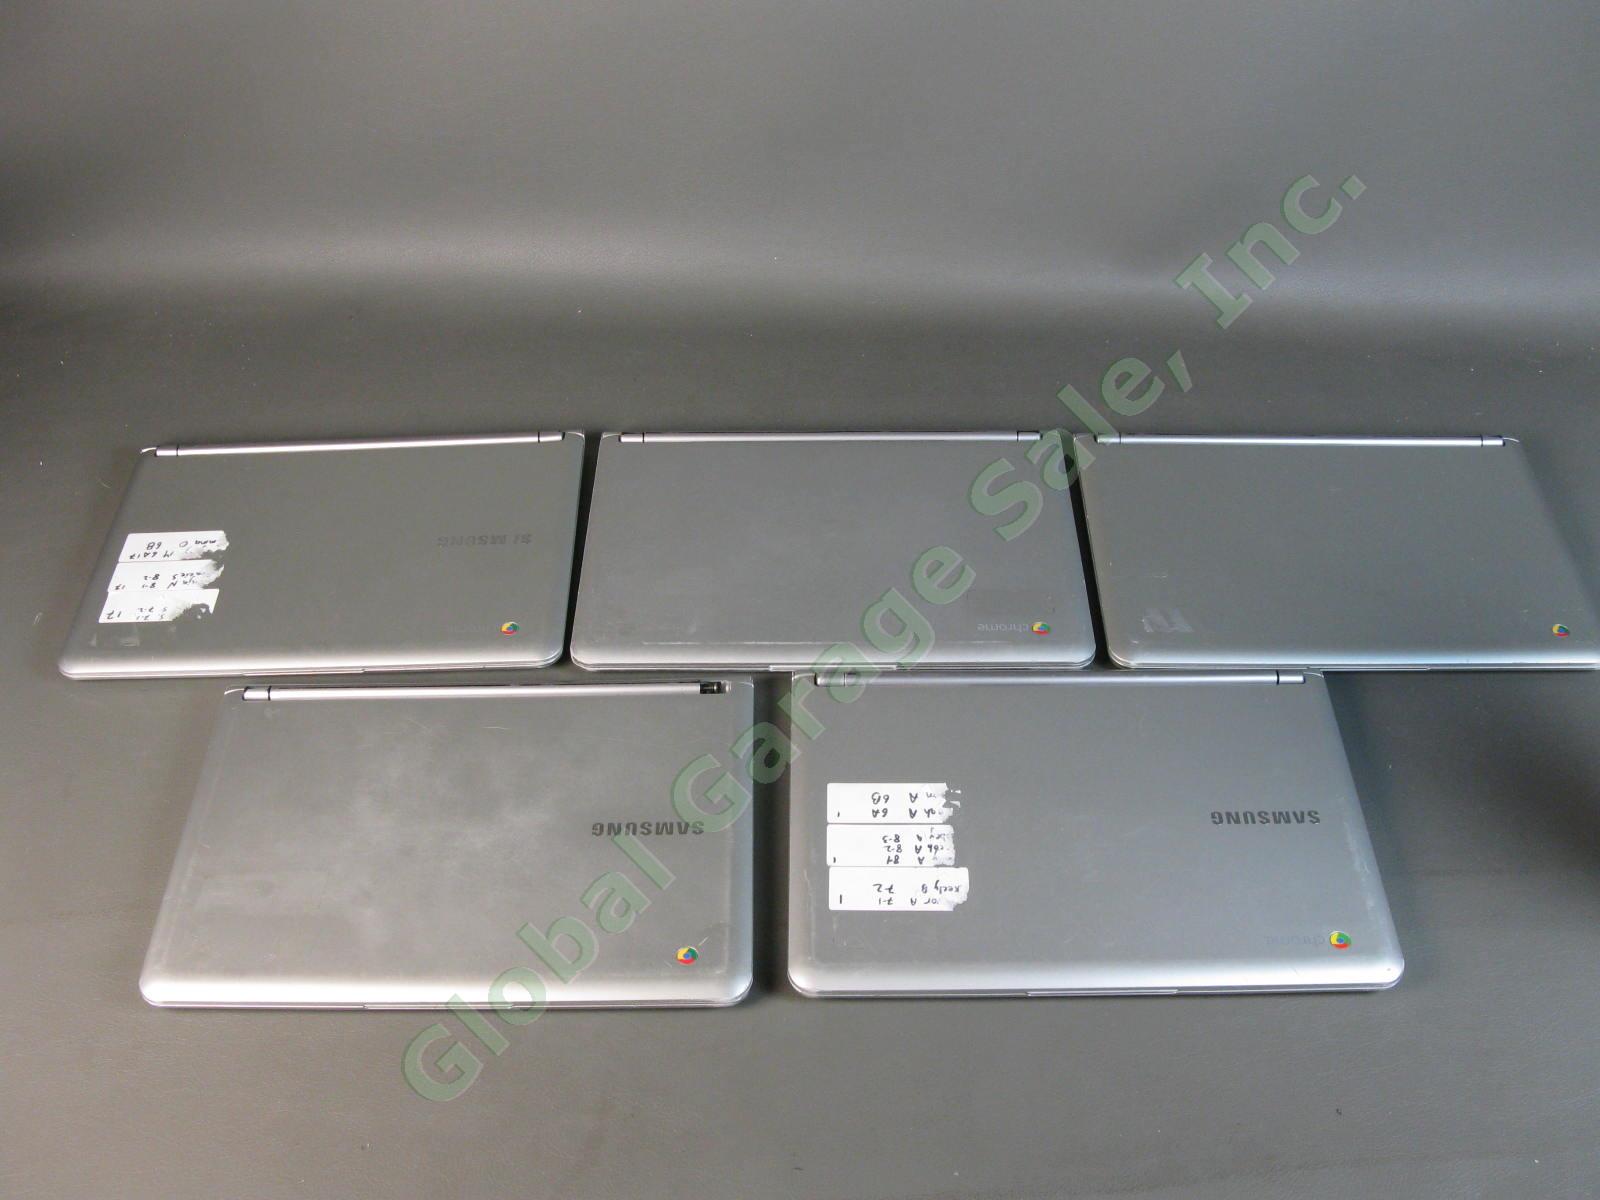 5 Samsung Chromebook 303C Laptop Computers Lot 11.6" 1.7GHz 2GB 16GB XE303C12 1